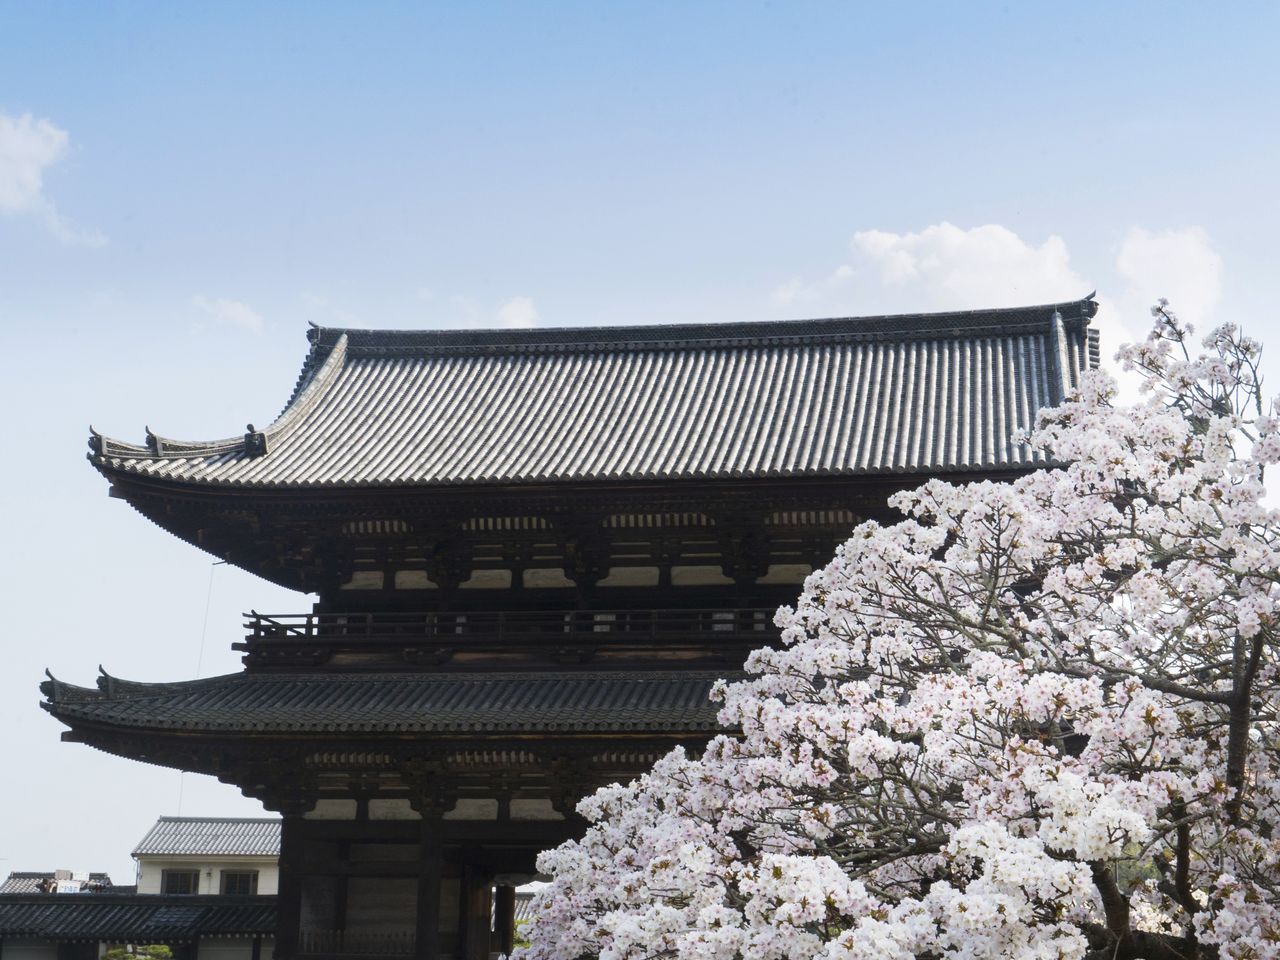 Cherry blossoms adorn Niōmon, the gate at the main entrance to Ninnaji.